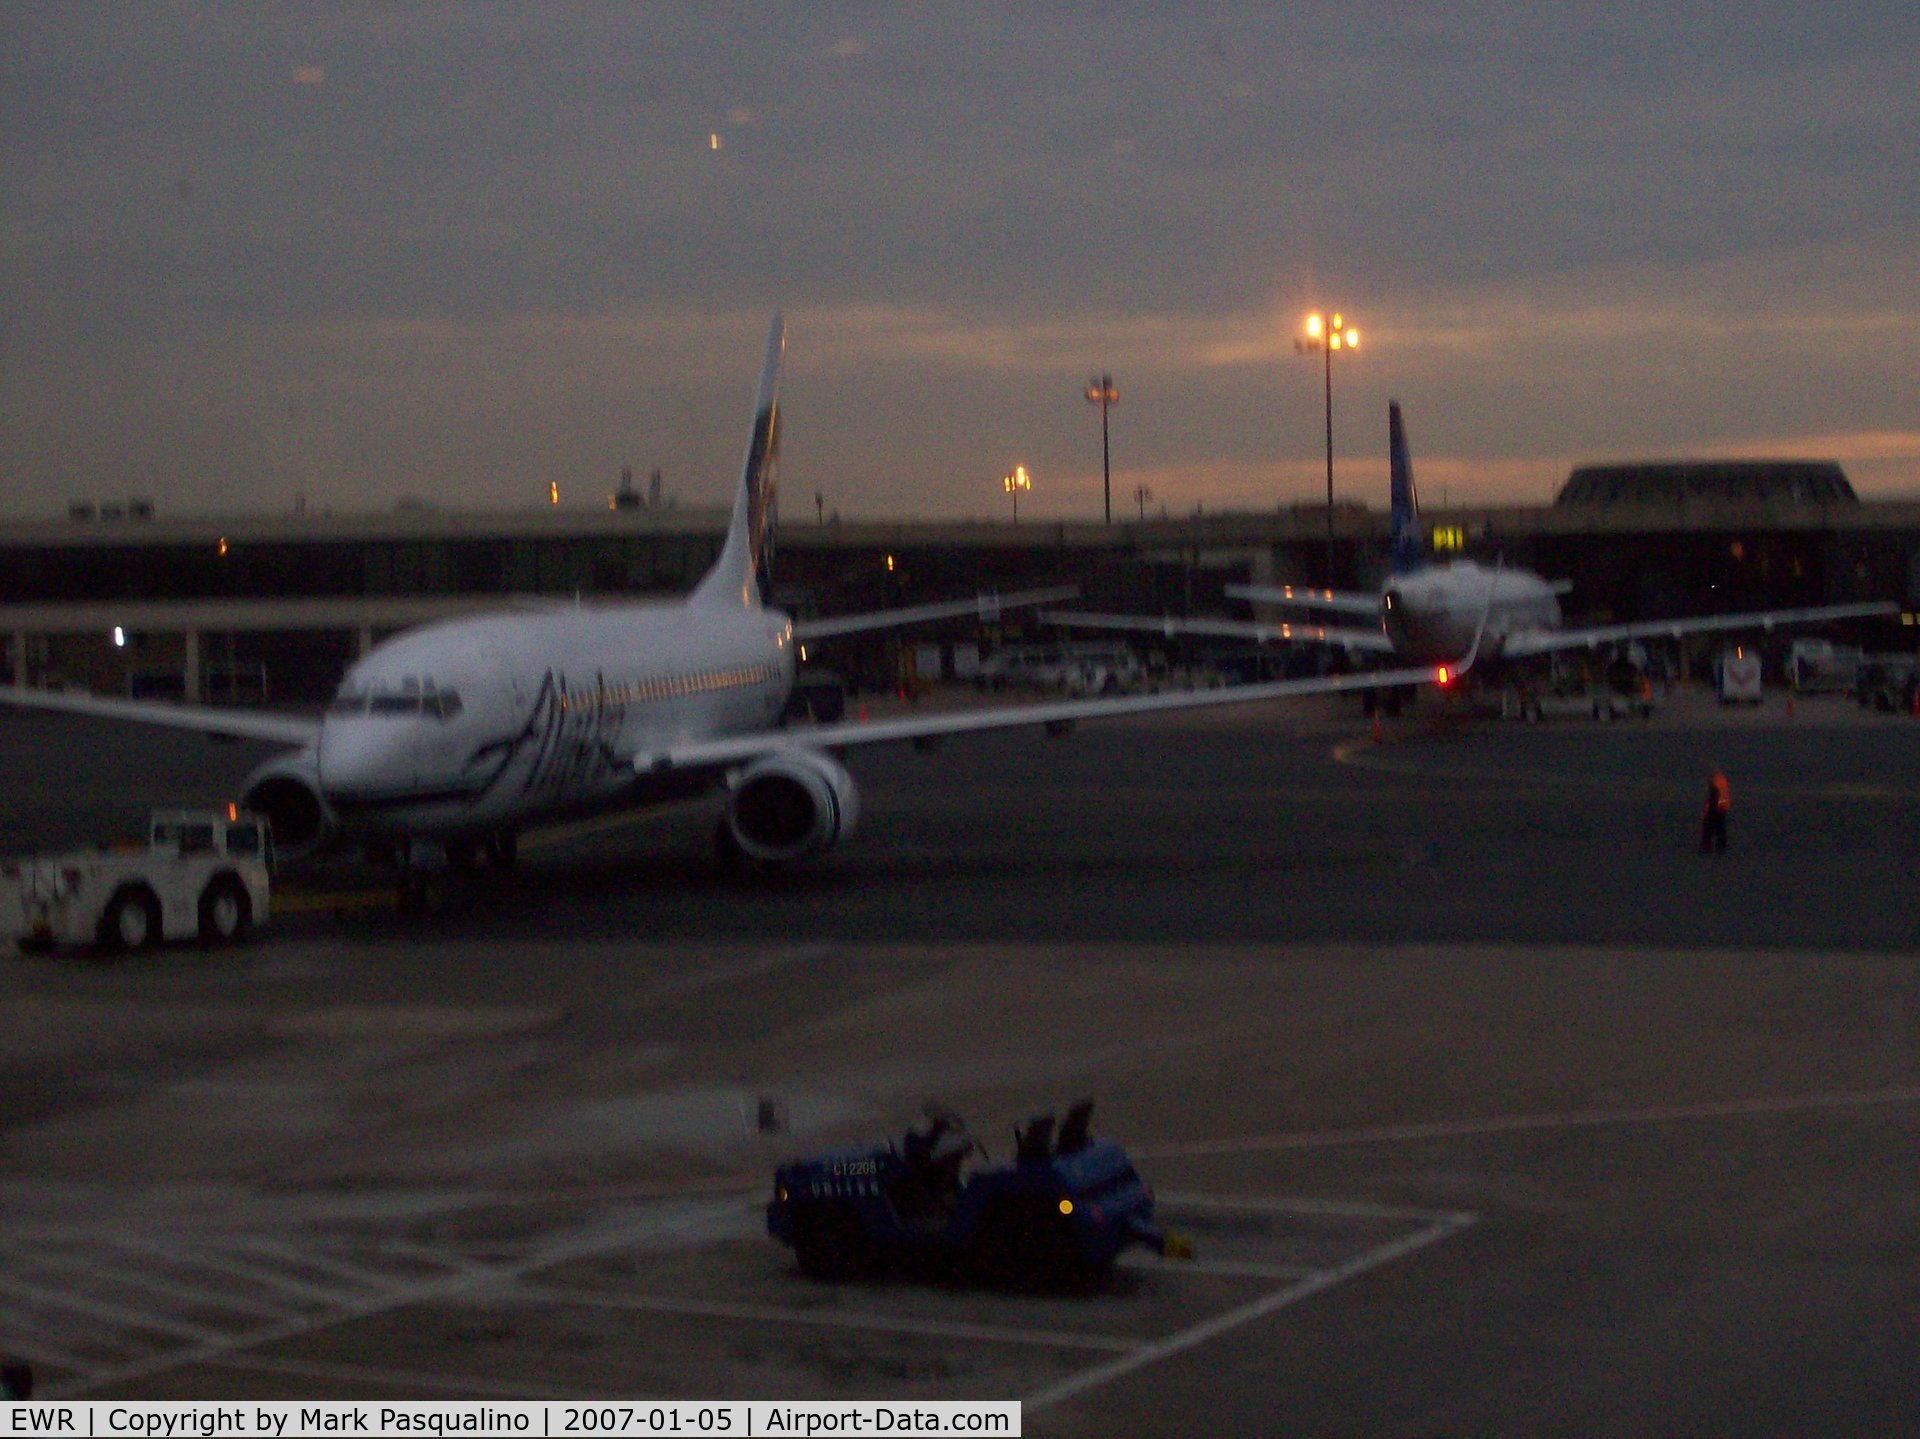 Newark Liberty International Airport (EWR) - Airline ramp